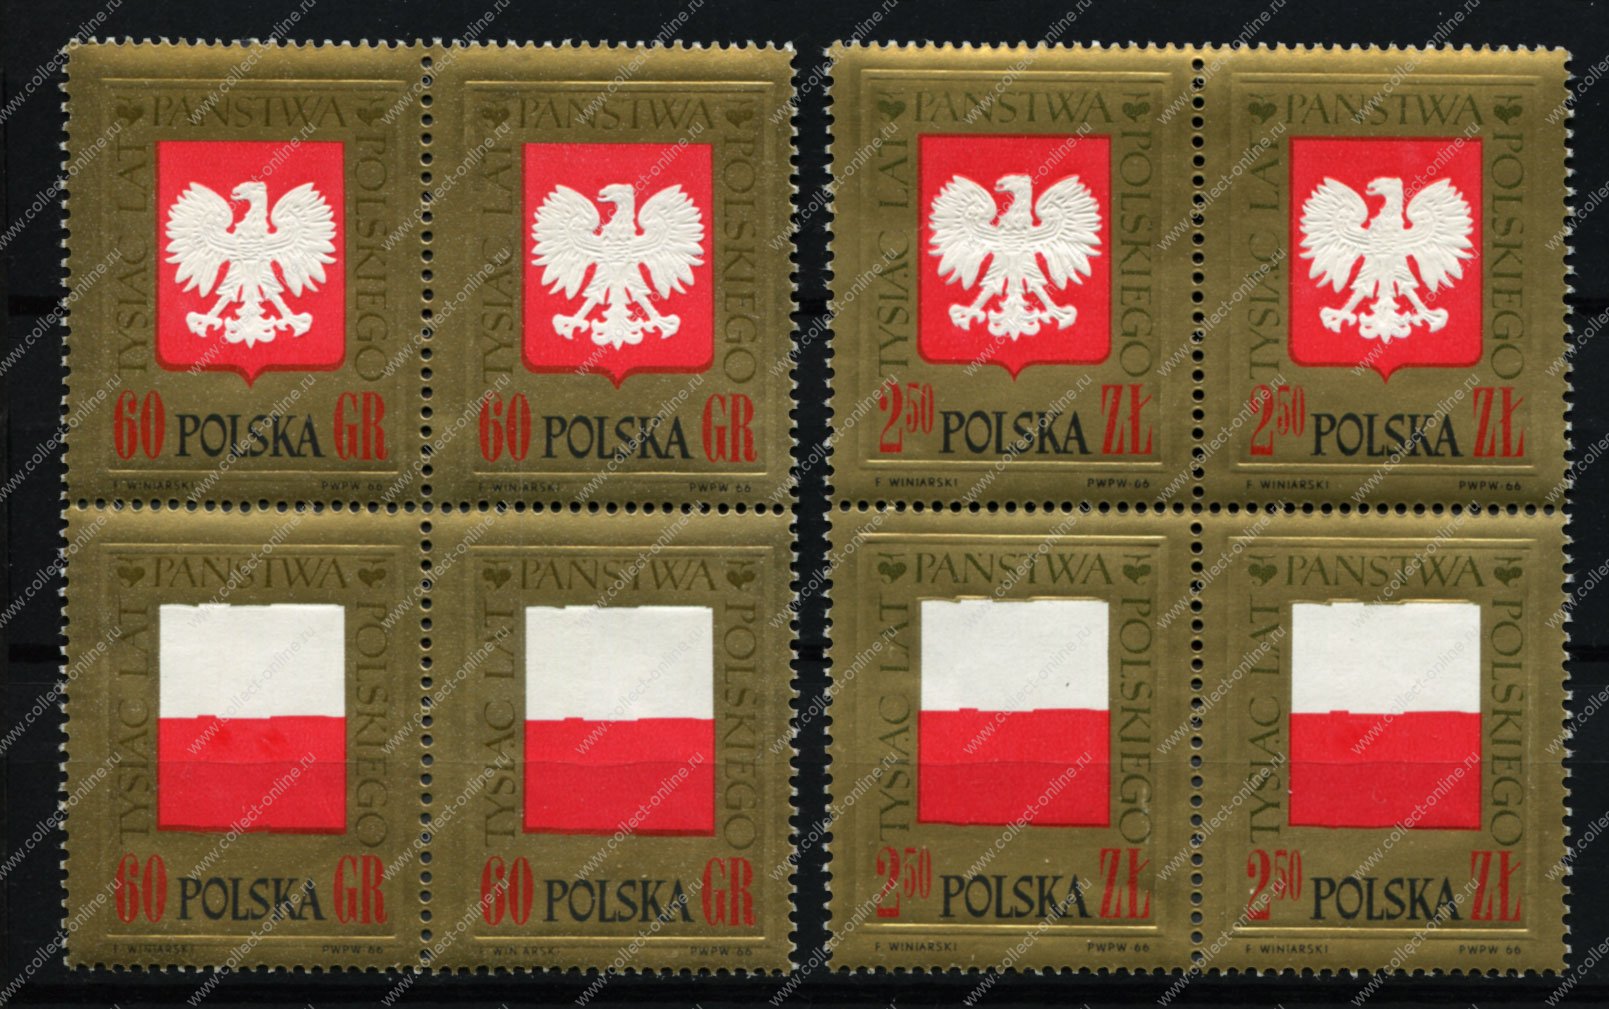 Польская ала. Poland 1966.